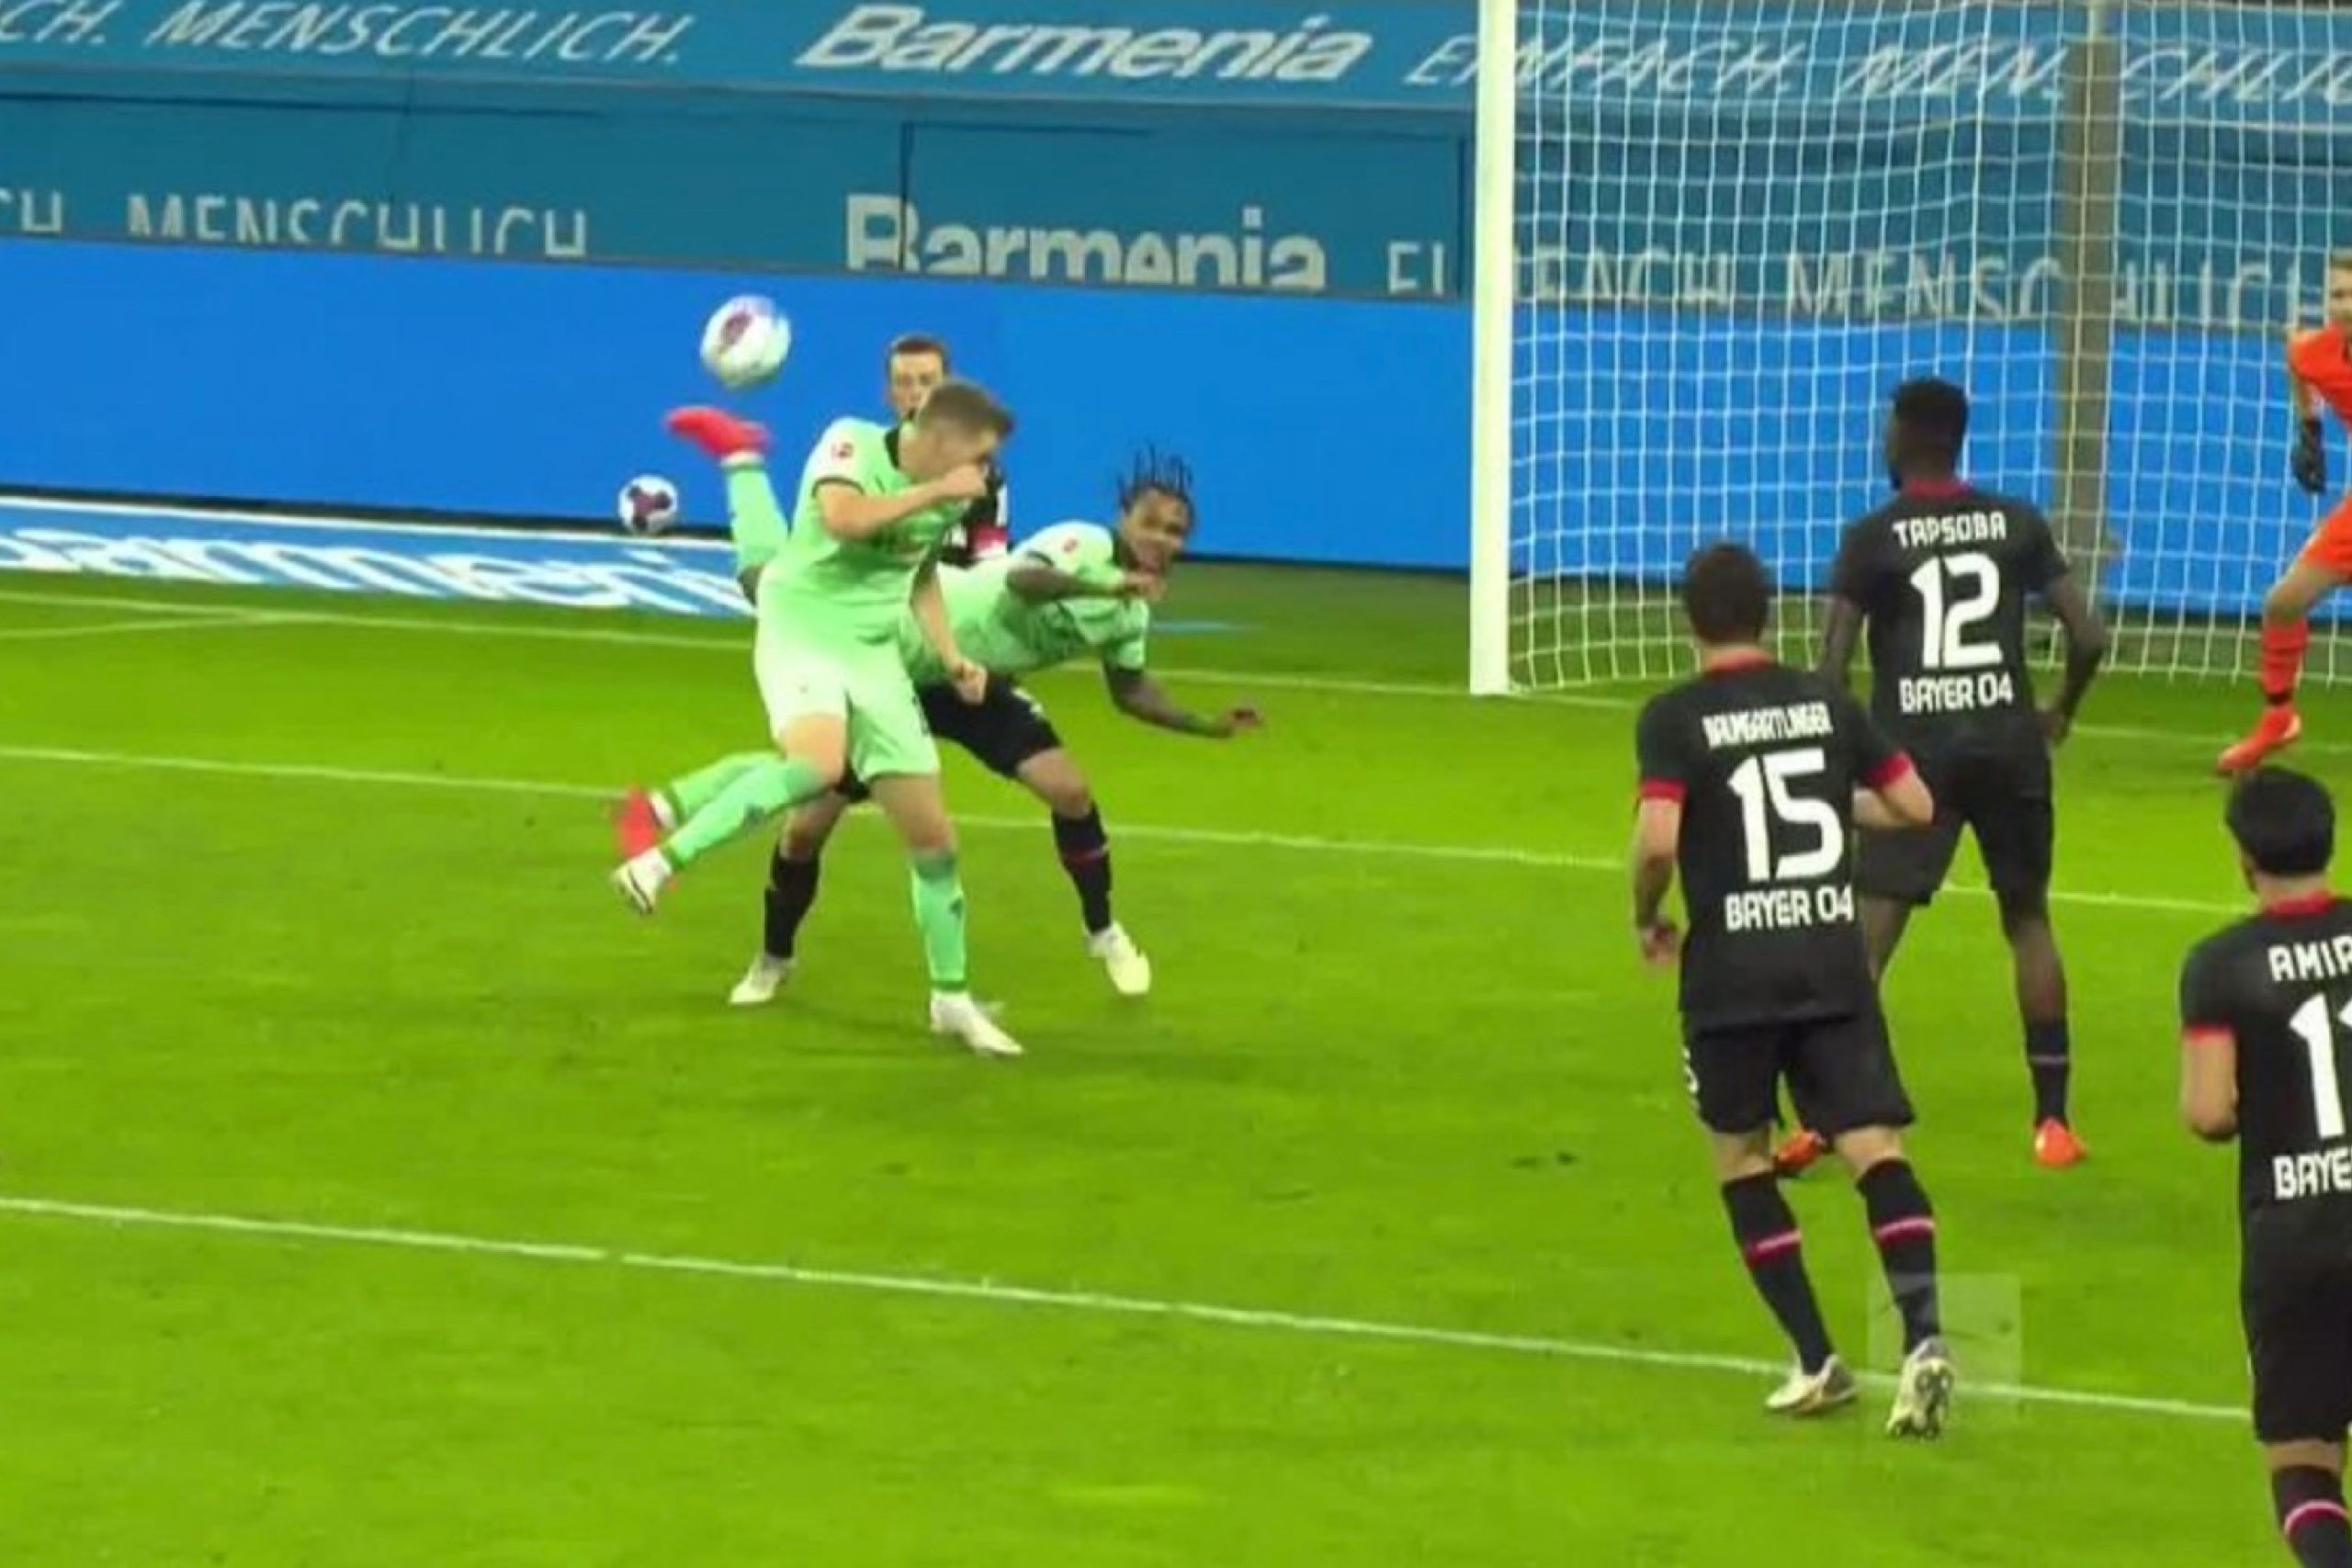 Valentino Lazaro scores Puskas-worthy scorpion kick goal against Bayer Leverkusen